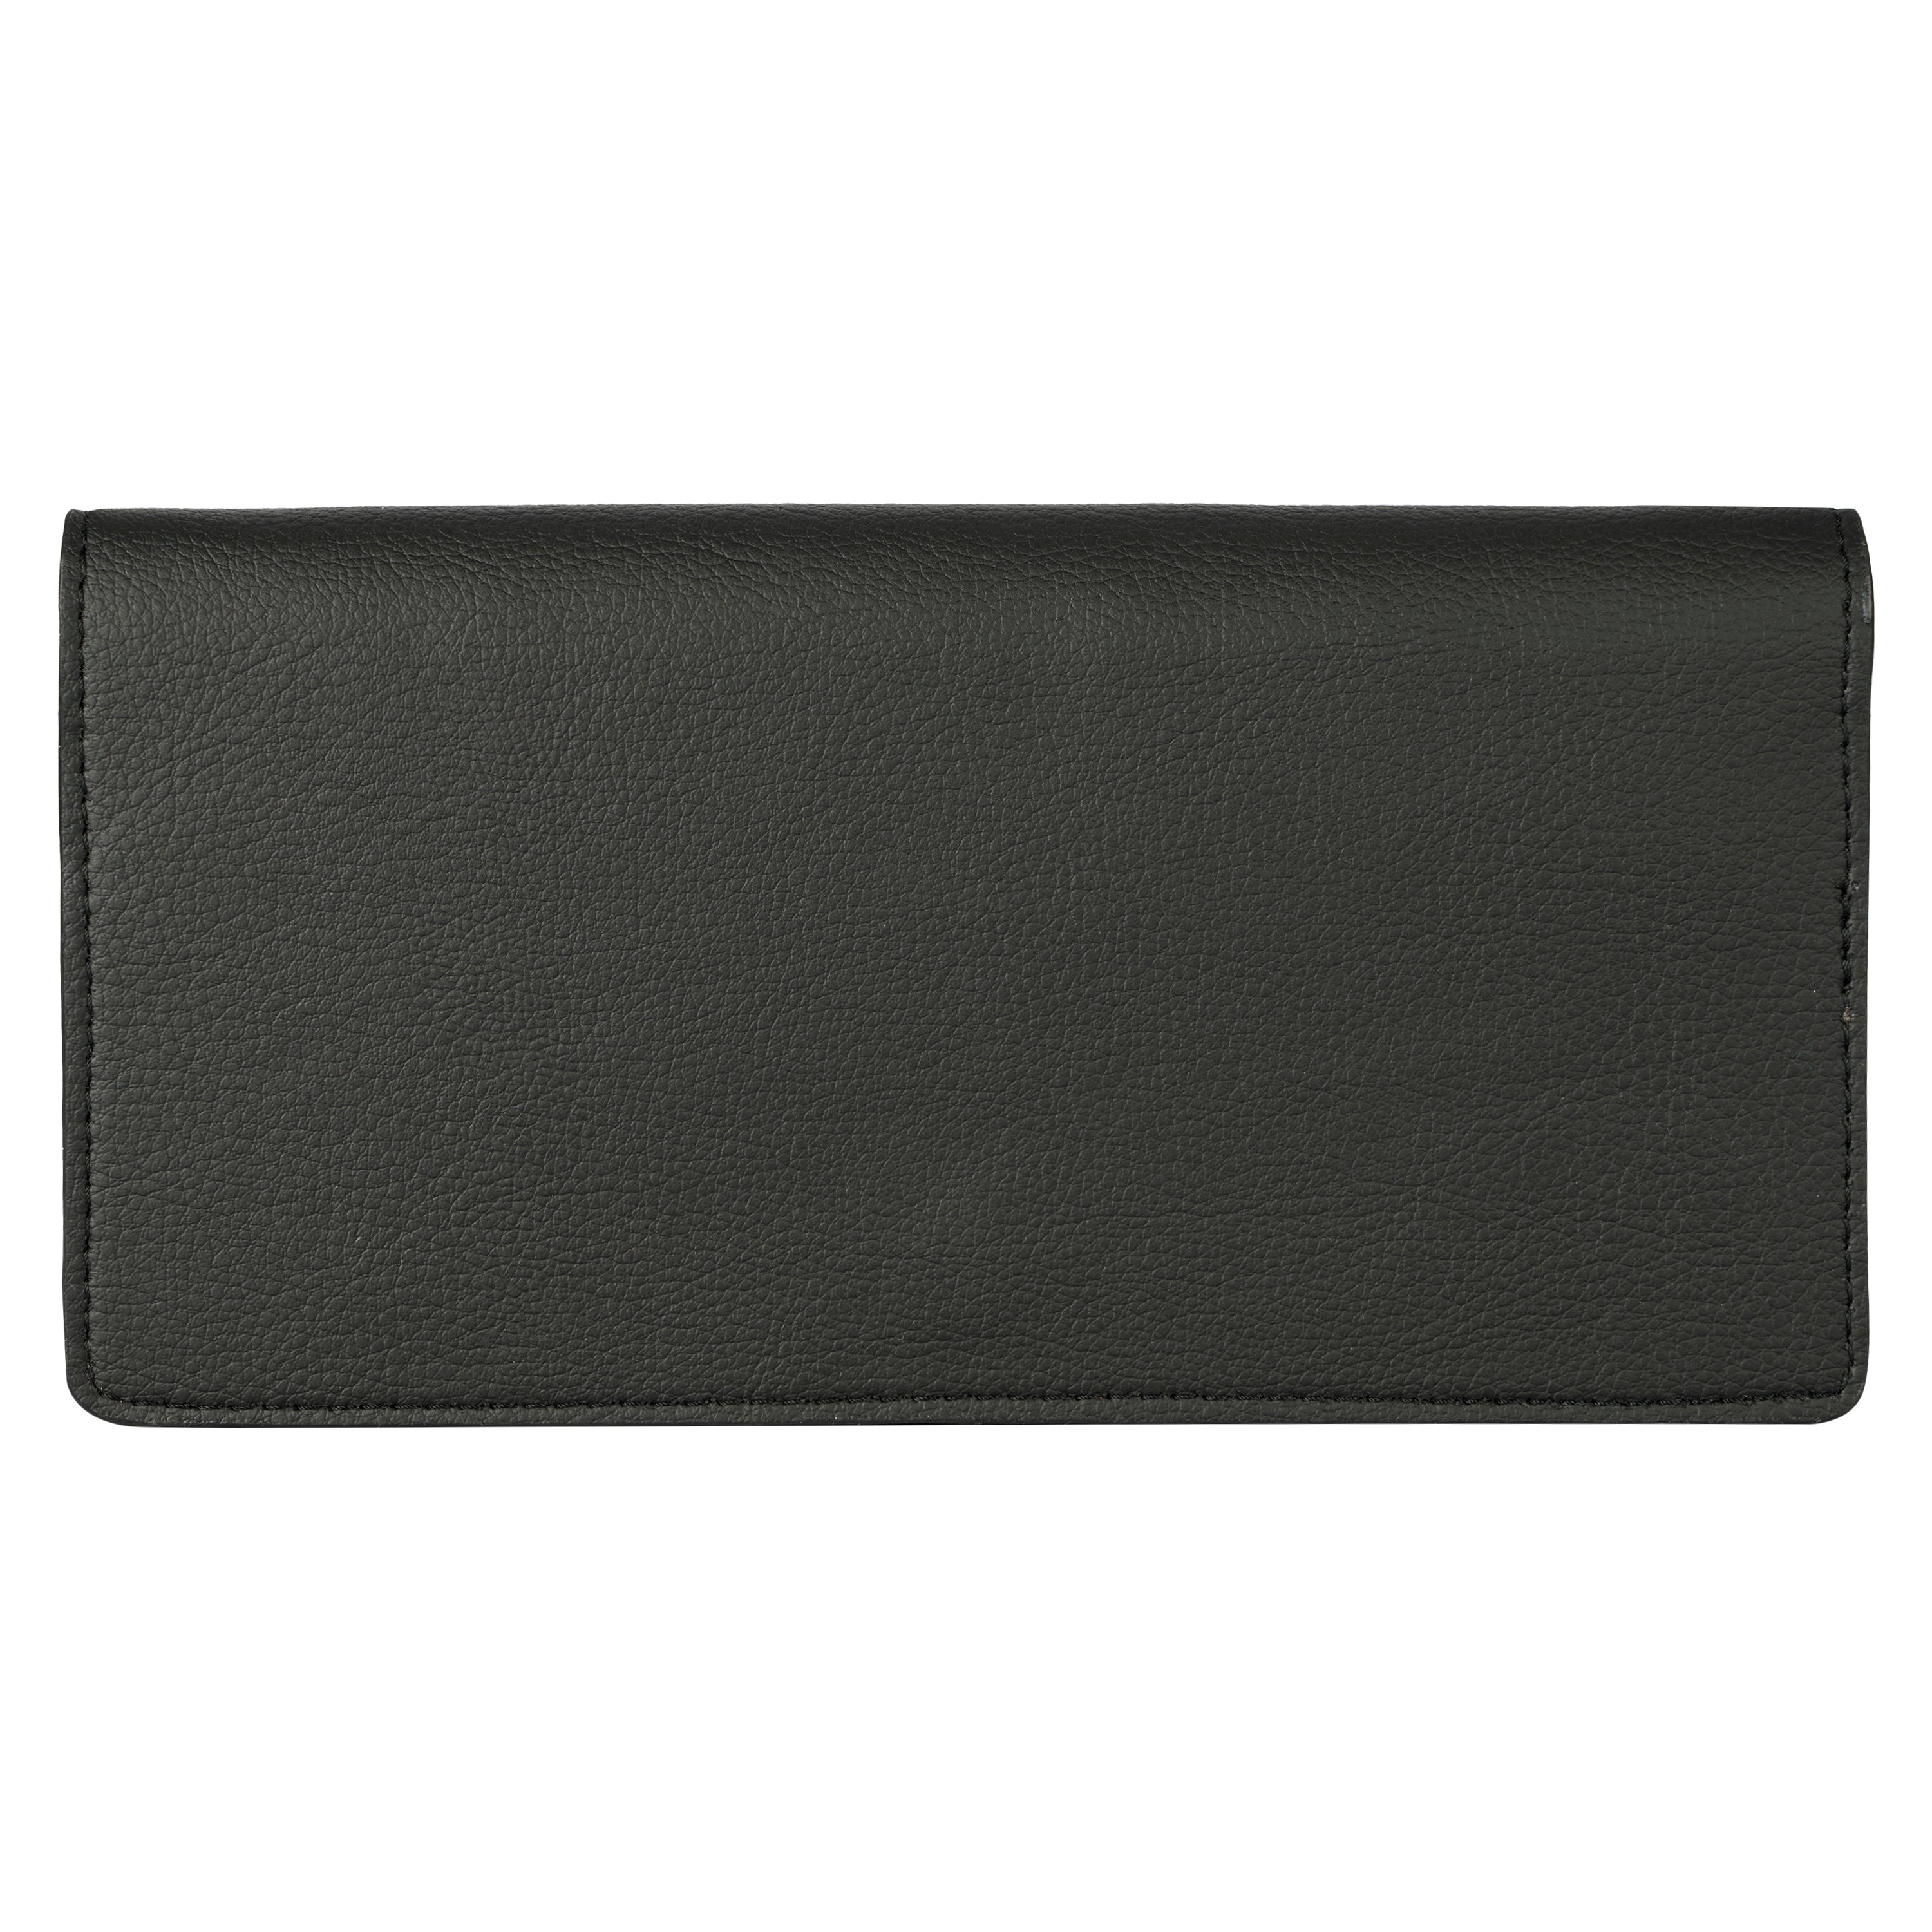 Cactus Leather Slim Wallet - Black-4